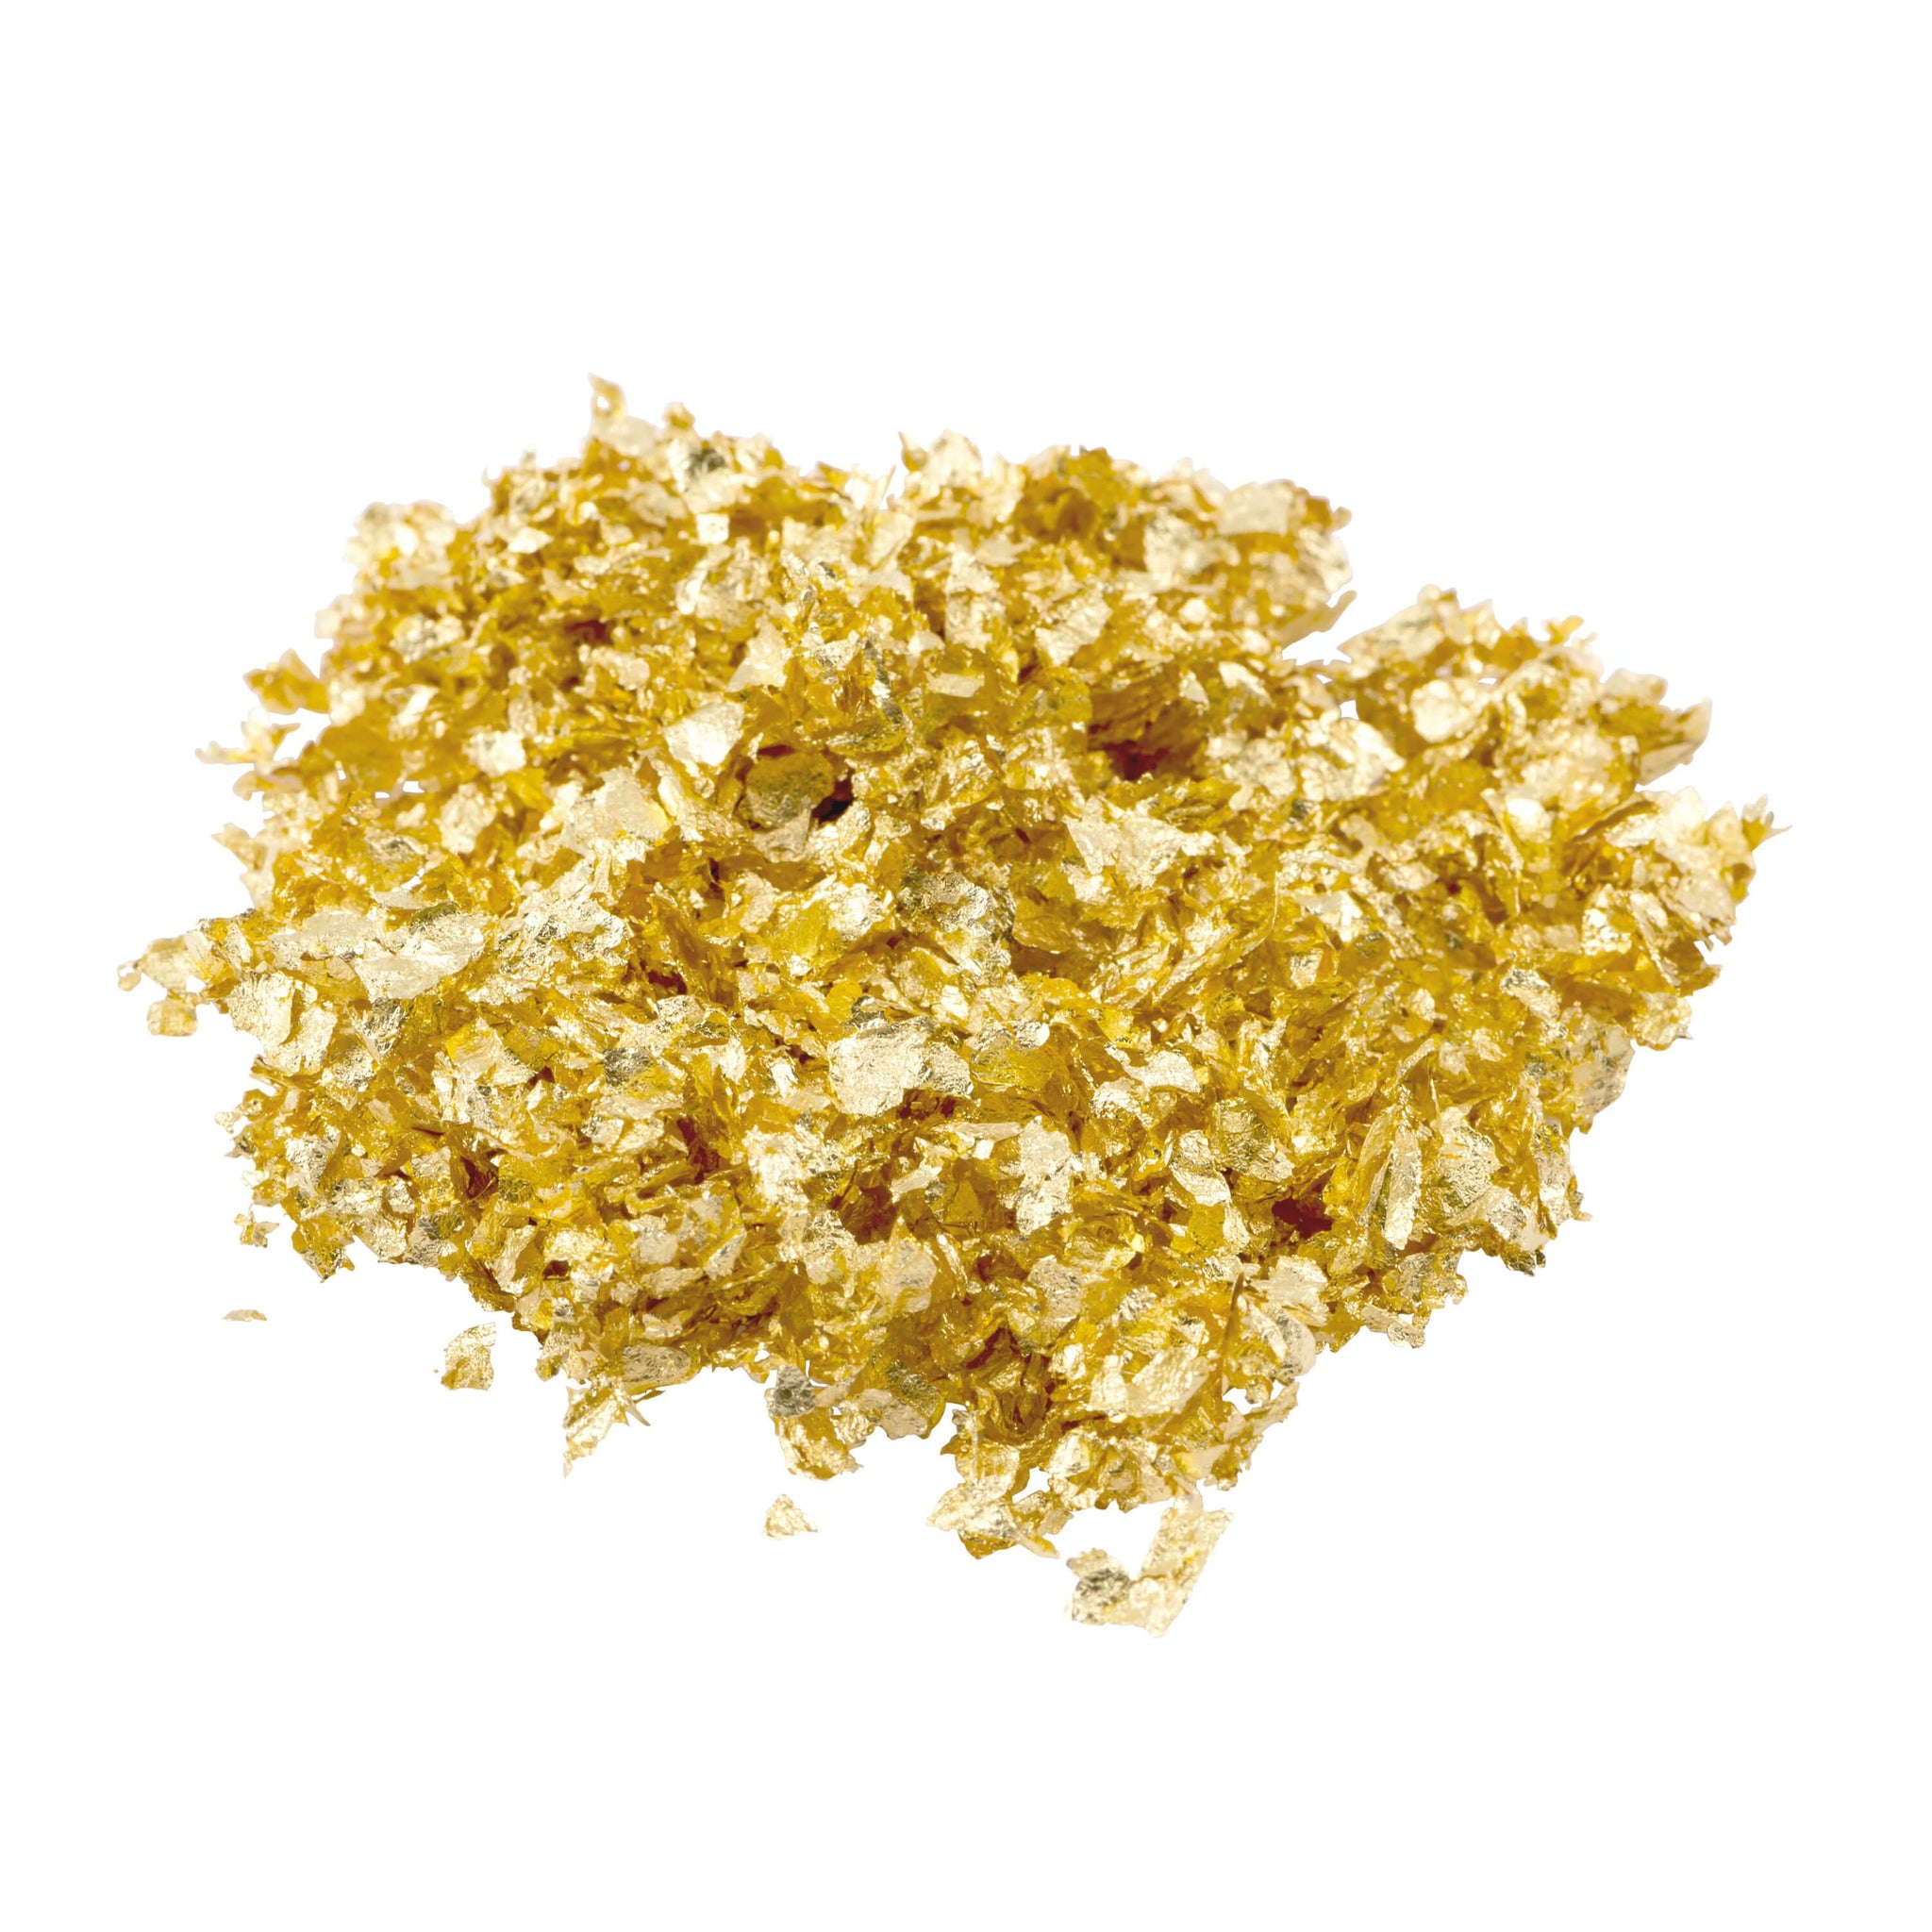 Purchase Versatile Edible Gold Flakes in Contemporary Designs 